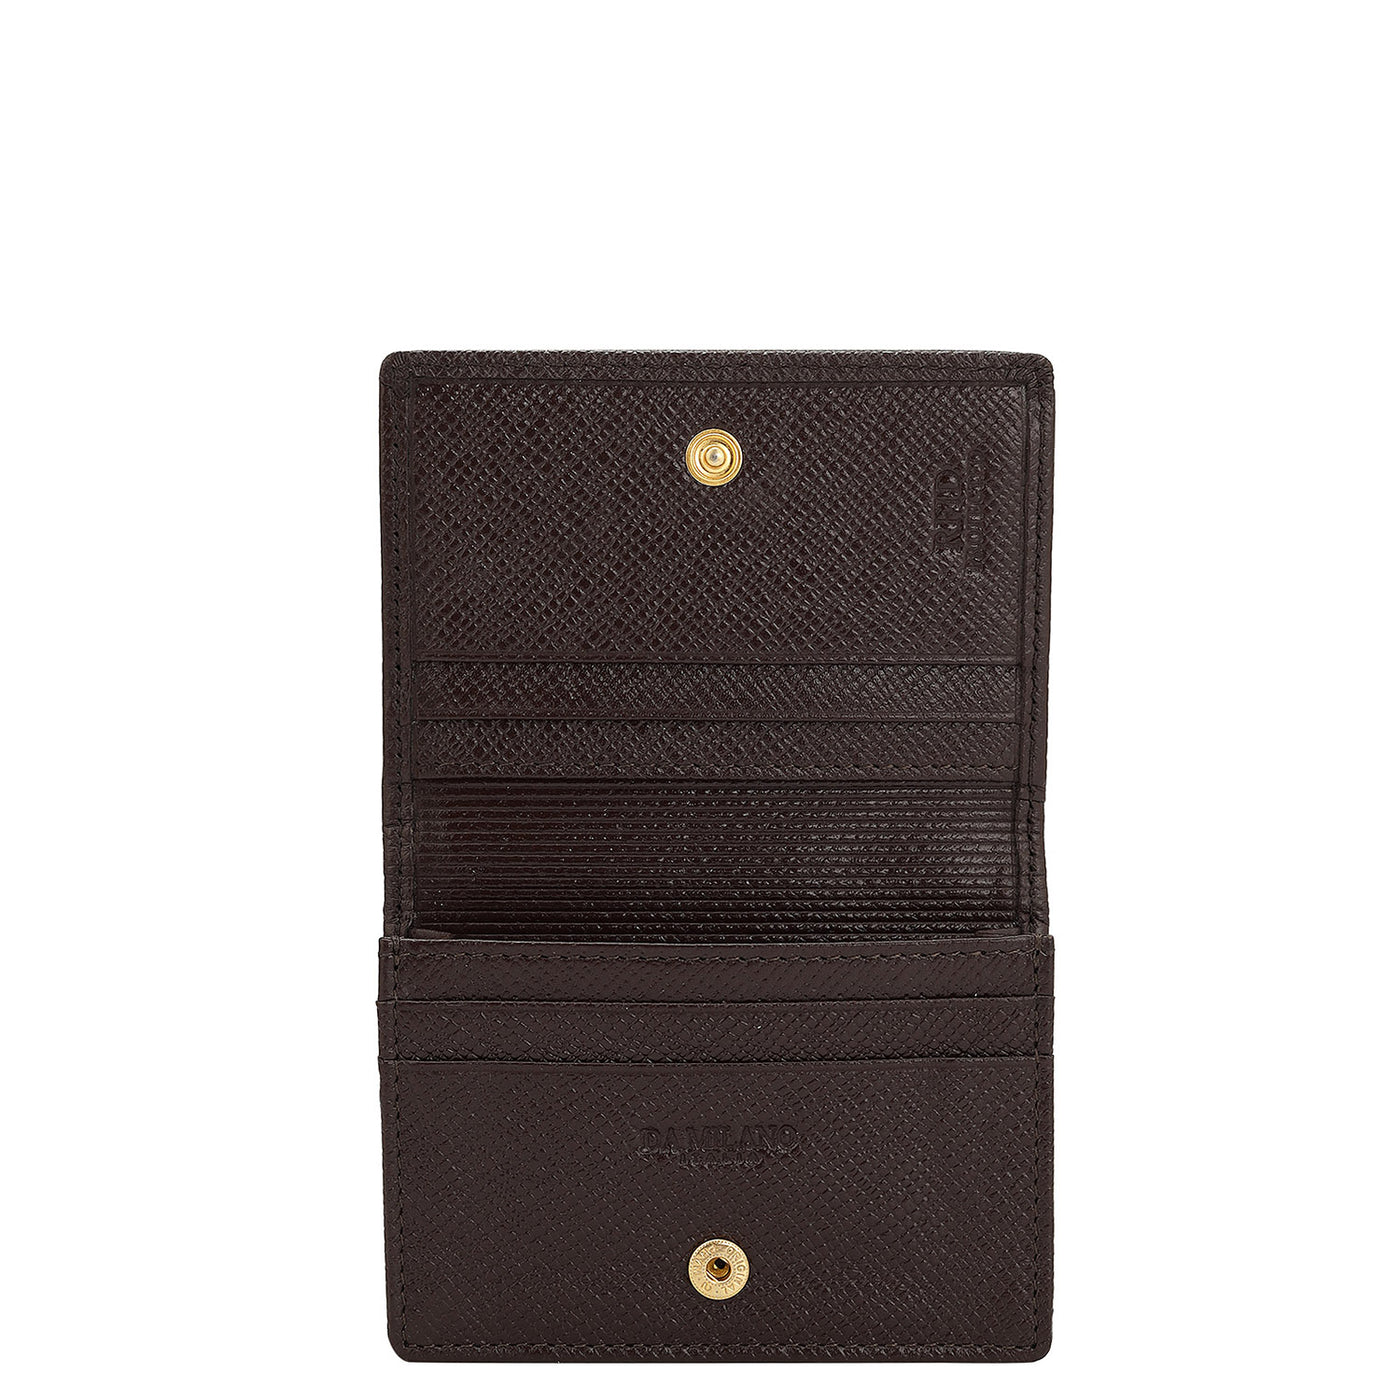 Monogram Franzy Leather Card Case - Chocolate